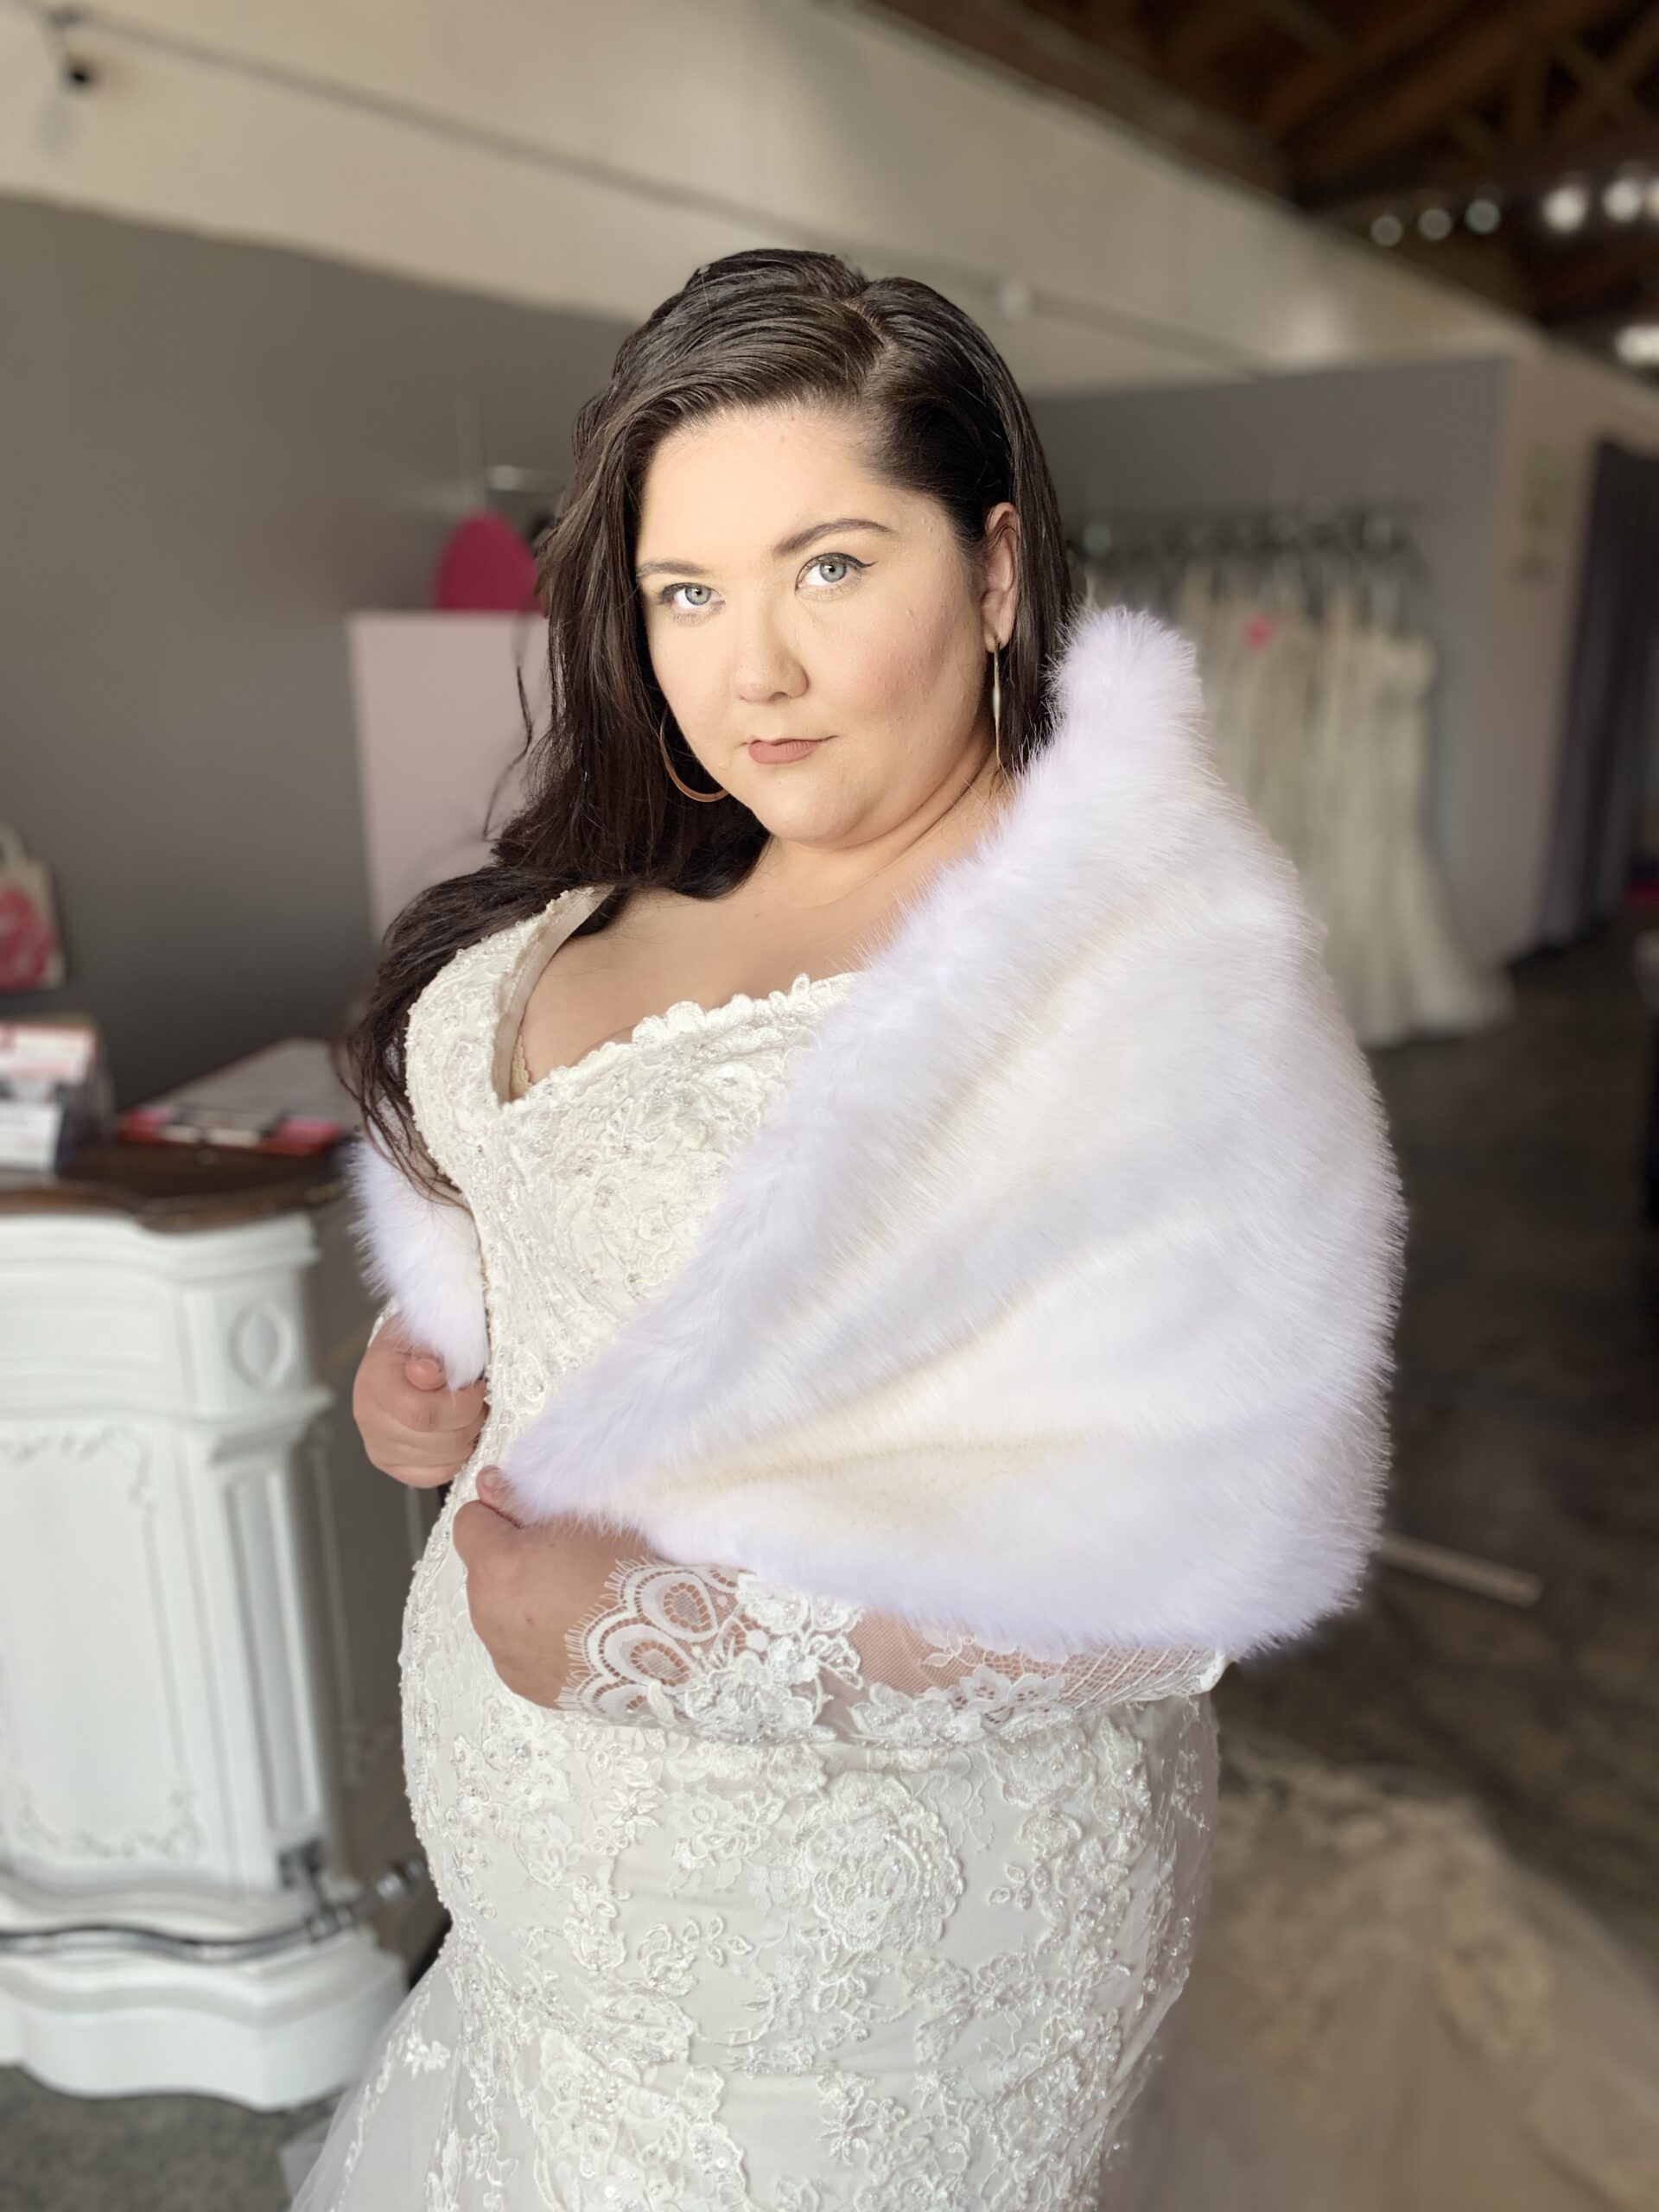 Fantastic Faux Wedding Furs are HERE! - Strut Bridal Salon